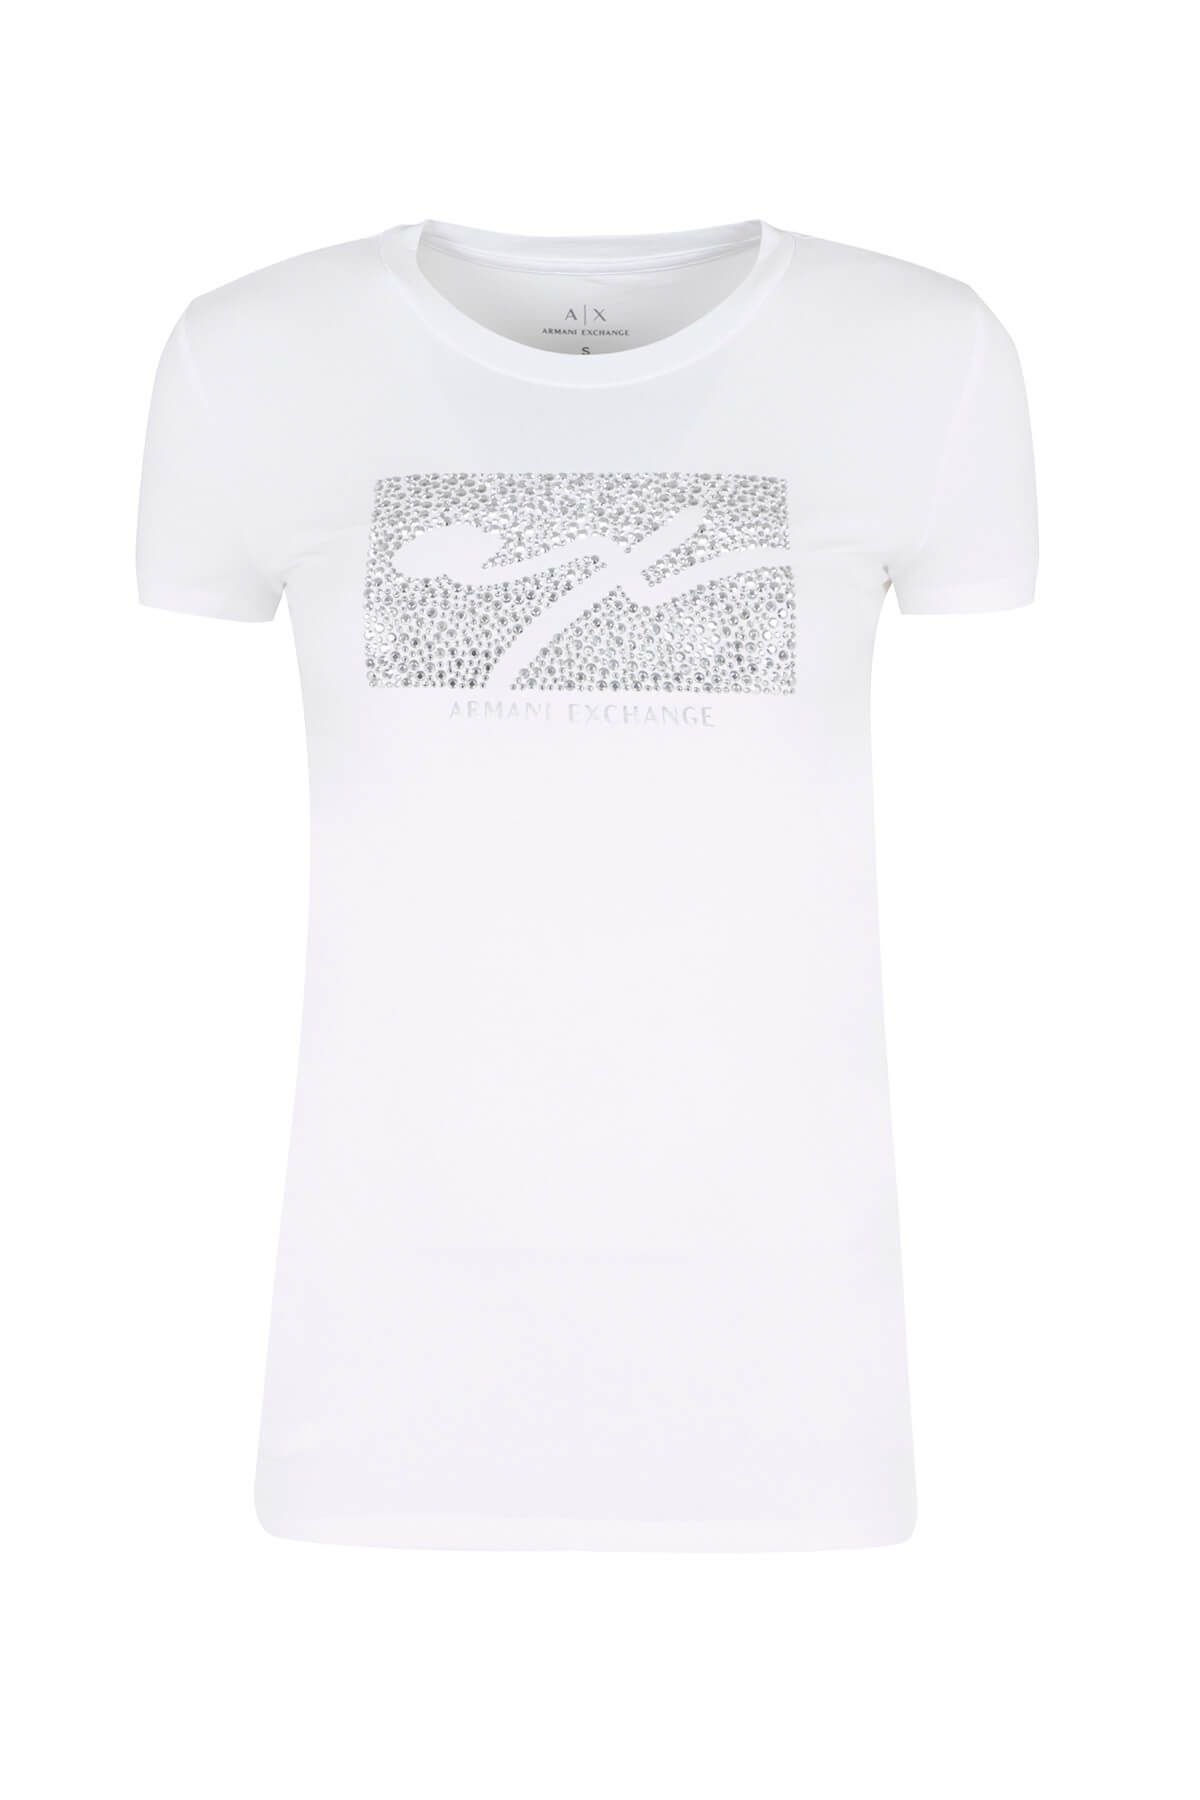 Armani Exchange Beyaz Kadın T-Shirt 6Zytbk Yjs8Z 1100